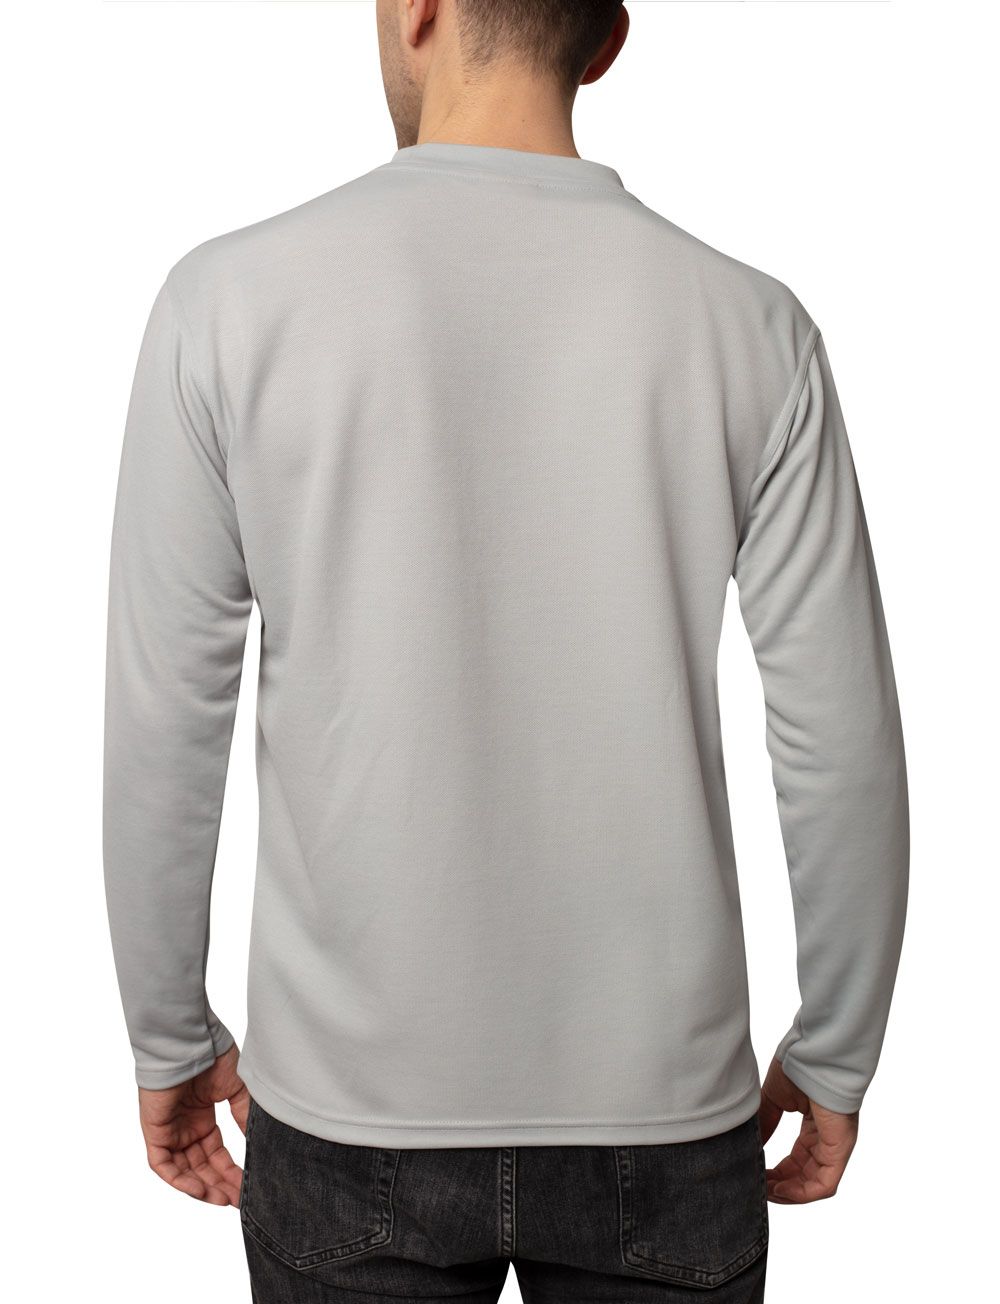 UV langarm Shirt für Herren Outdoor V-Ausschnitt grau back